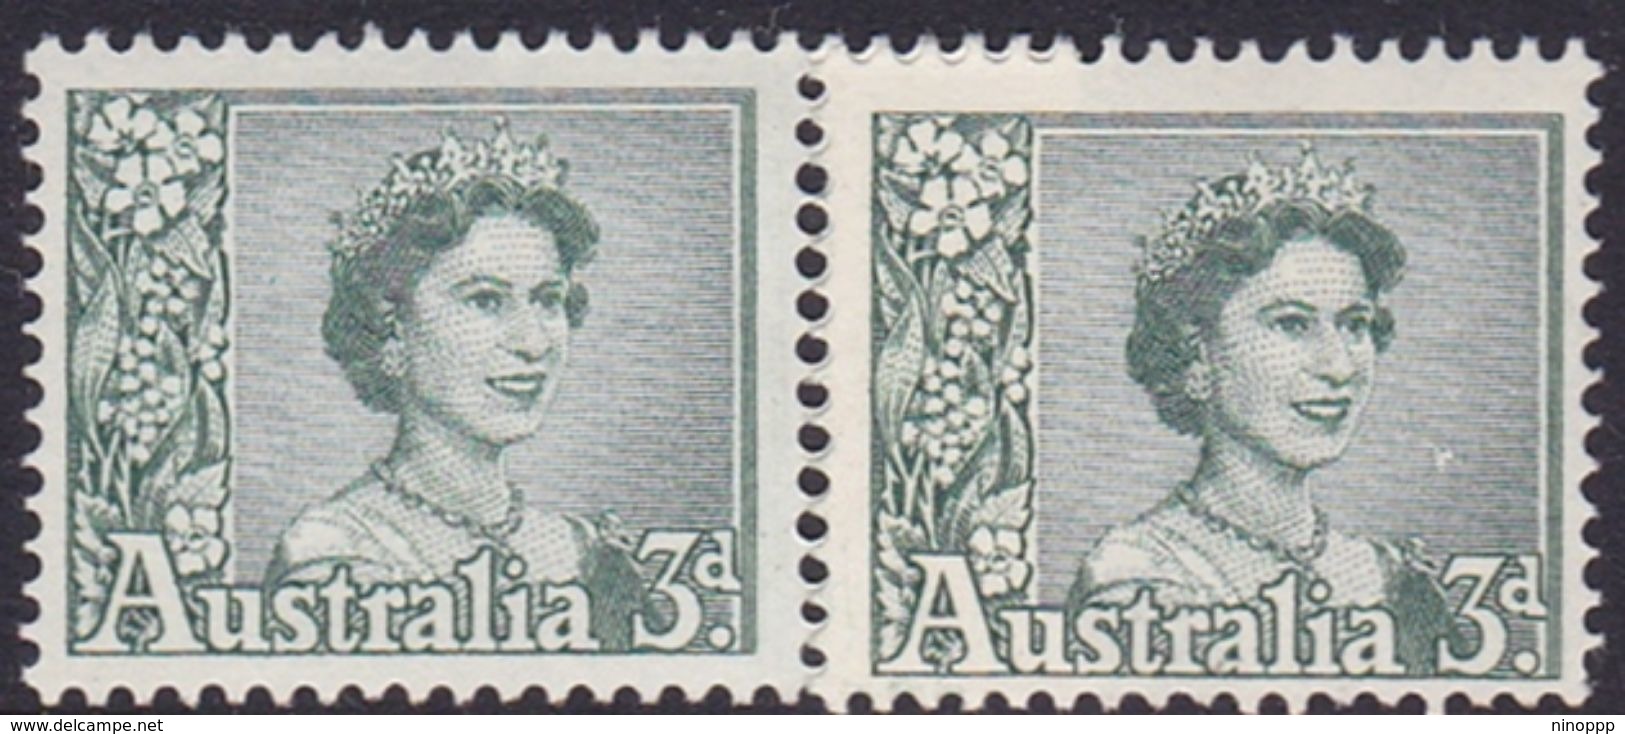 Australia ASC 343 1959 Queen Elizabeth II 3d Blue-green, Joint Coil Pair, Mint Never Hinged - Essais & Réimpressions